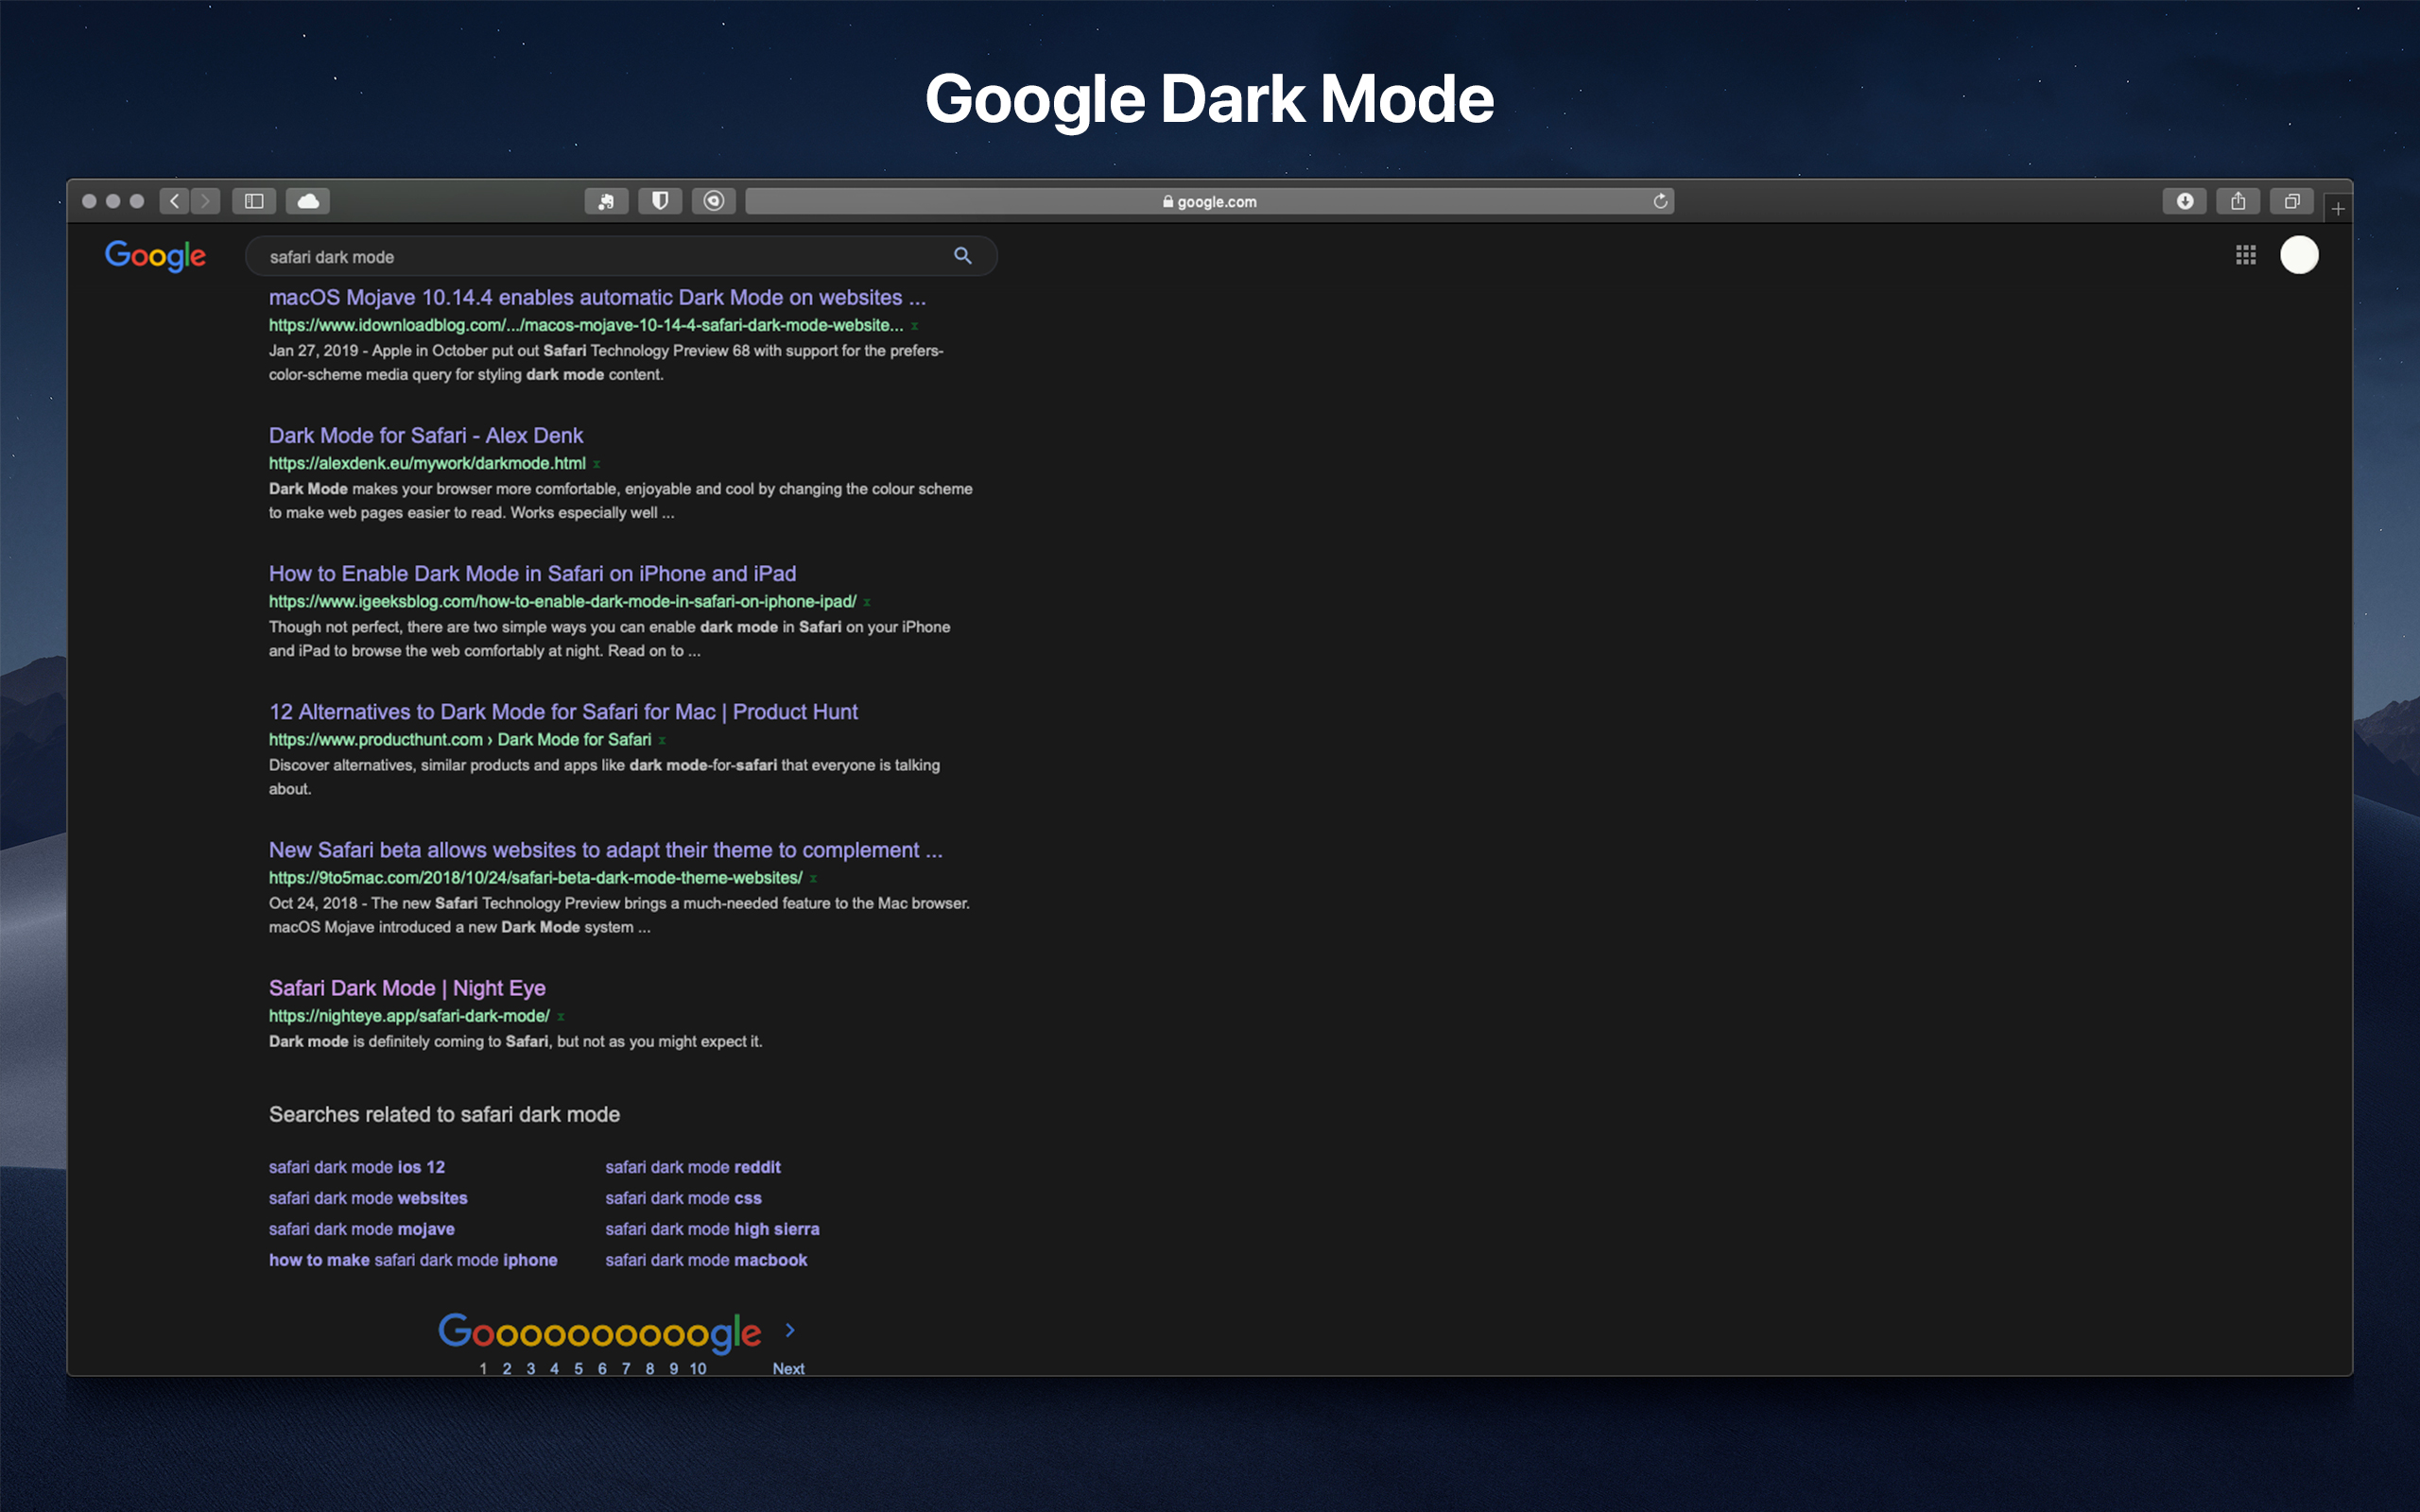 Google_Night Eye - Dark mode extension